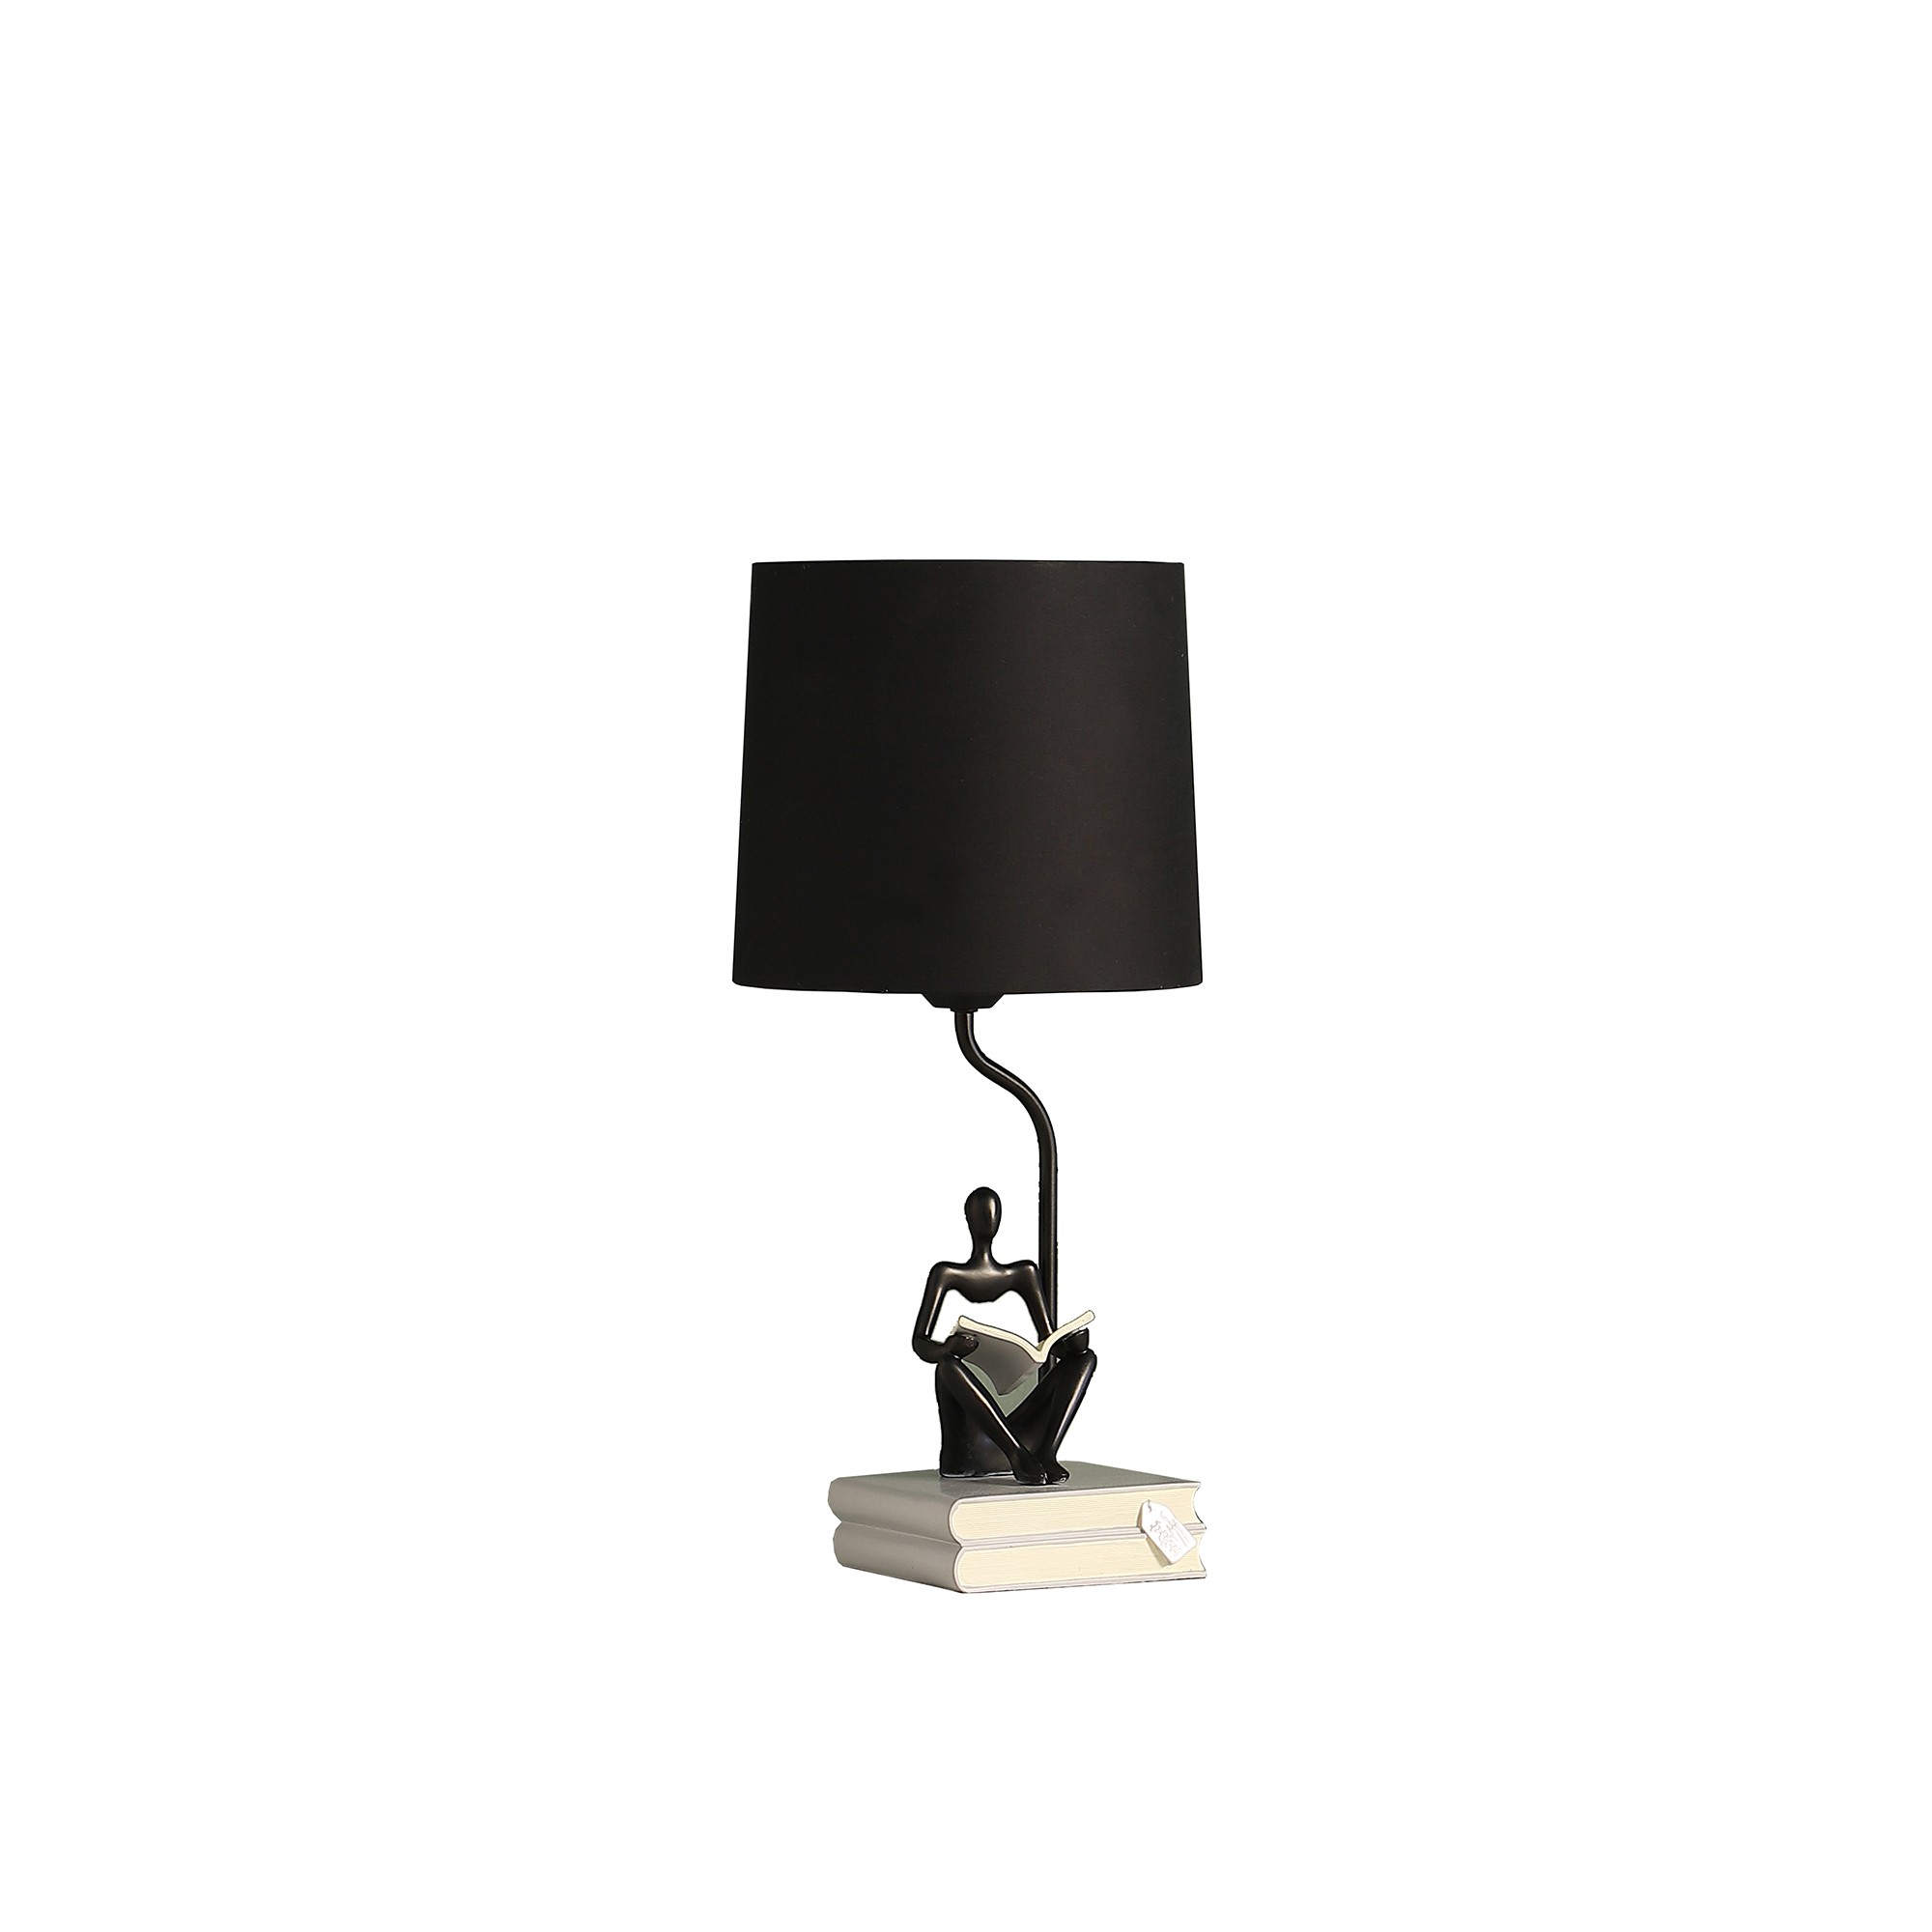 21" Modern Black Reader Sculpture Table Lamp